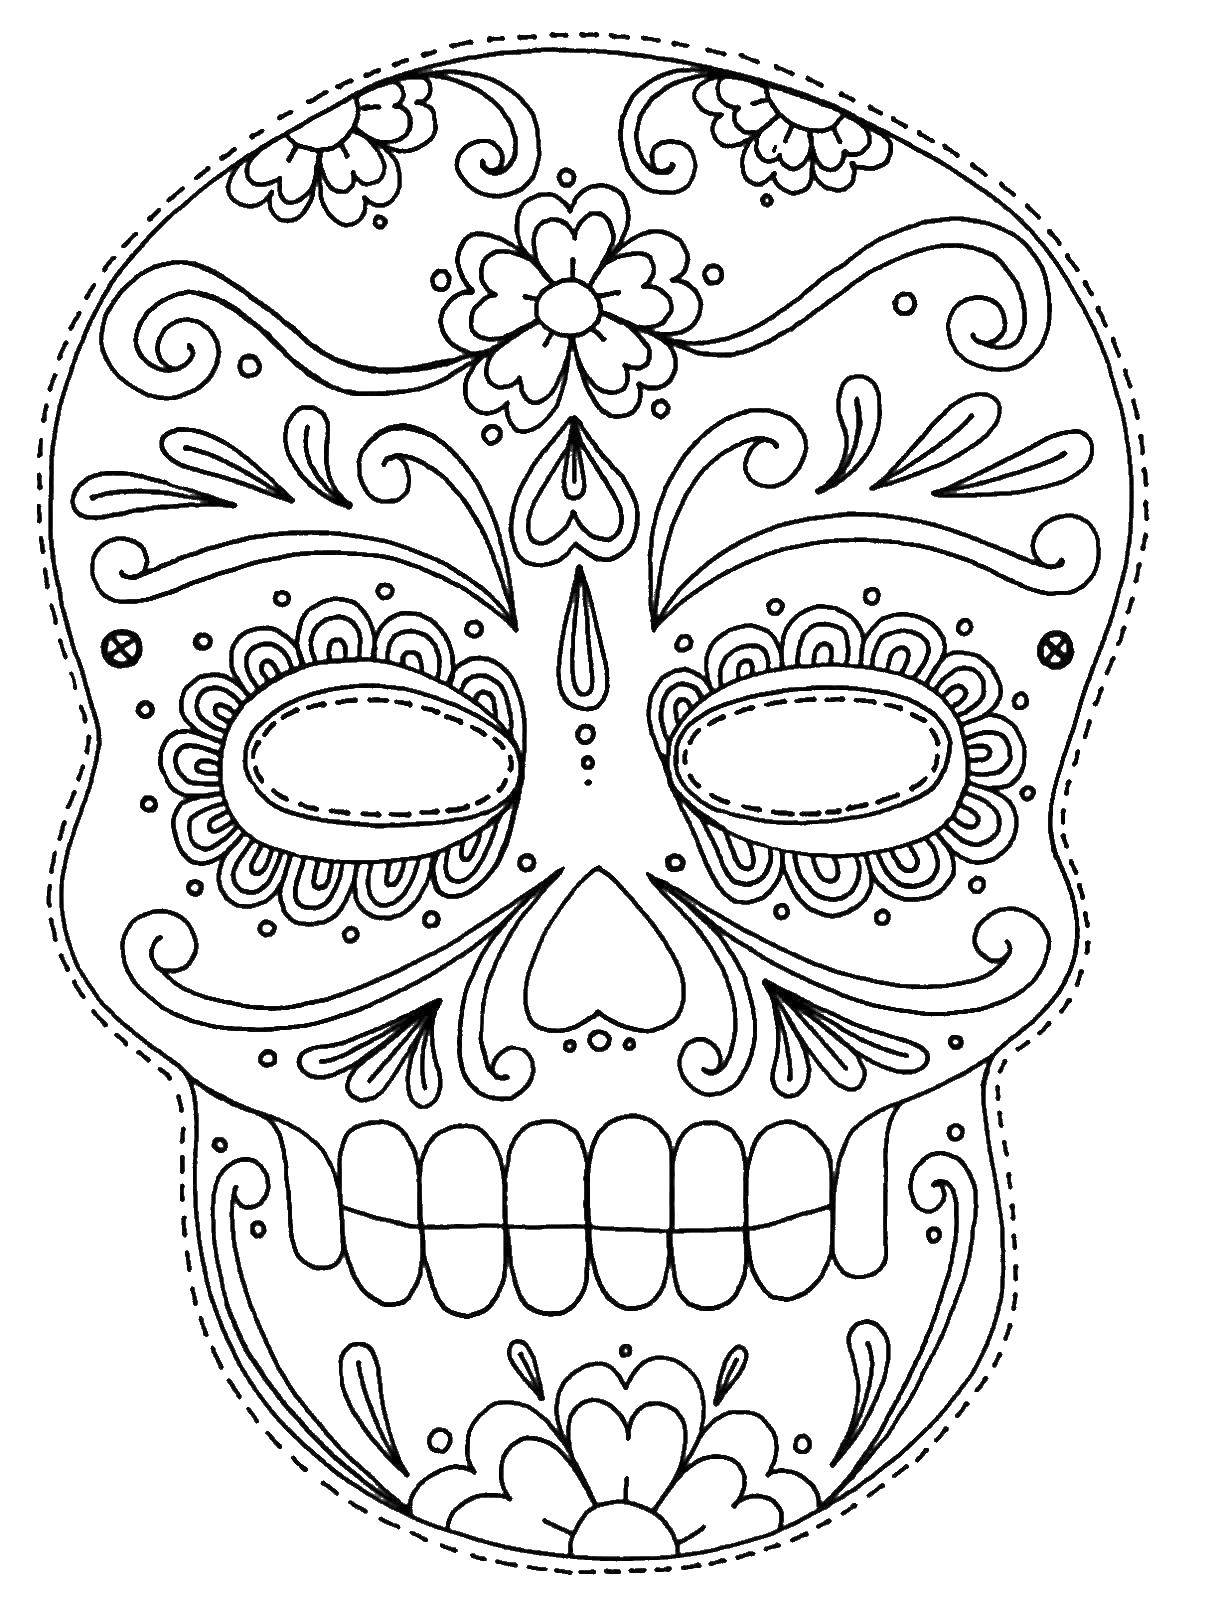 Coloring Beautiful skull. Category Skull. Tags:  skull, patterns, flowers.